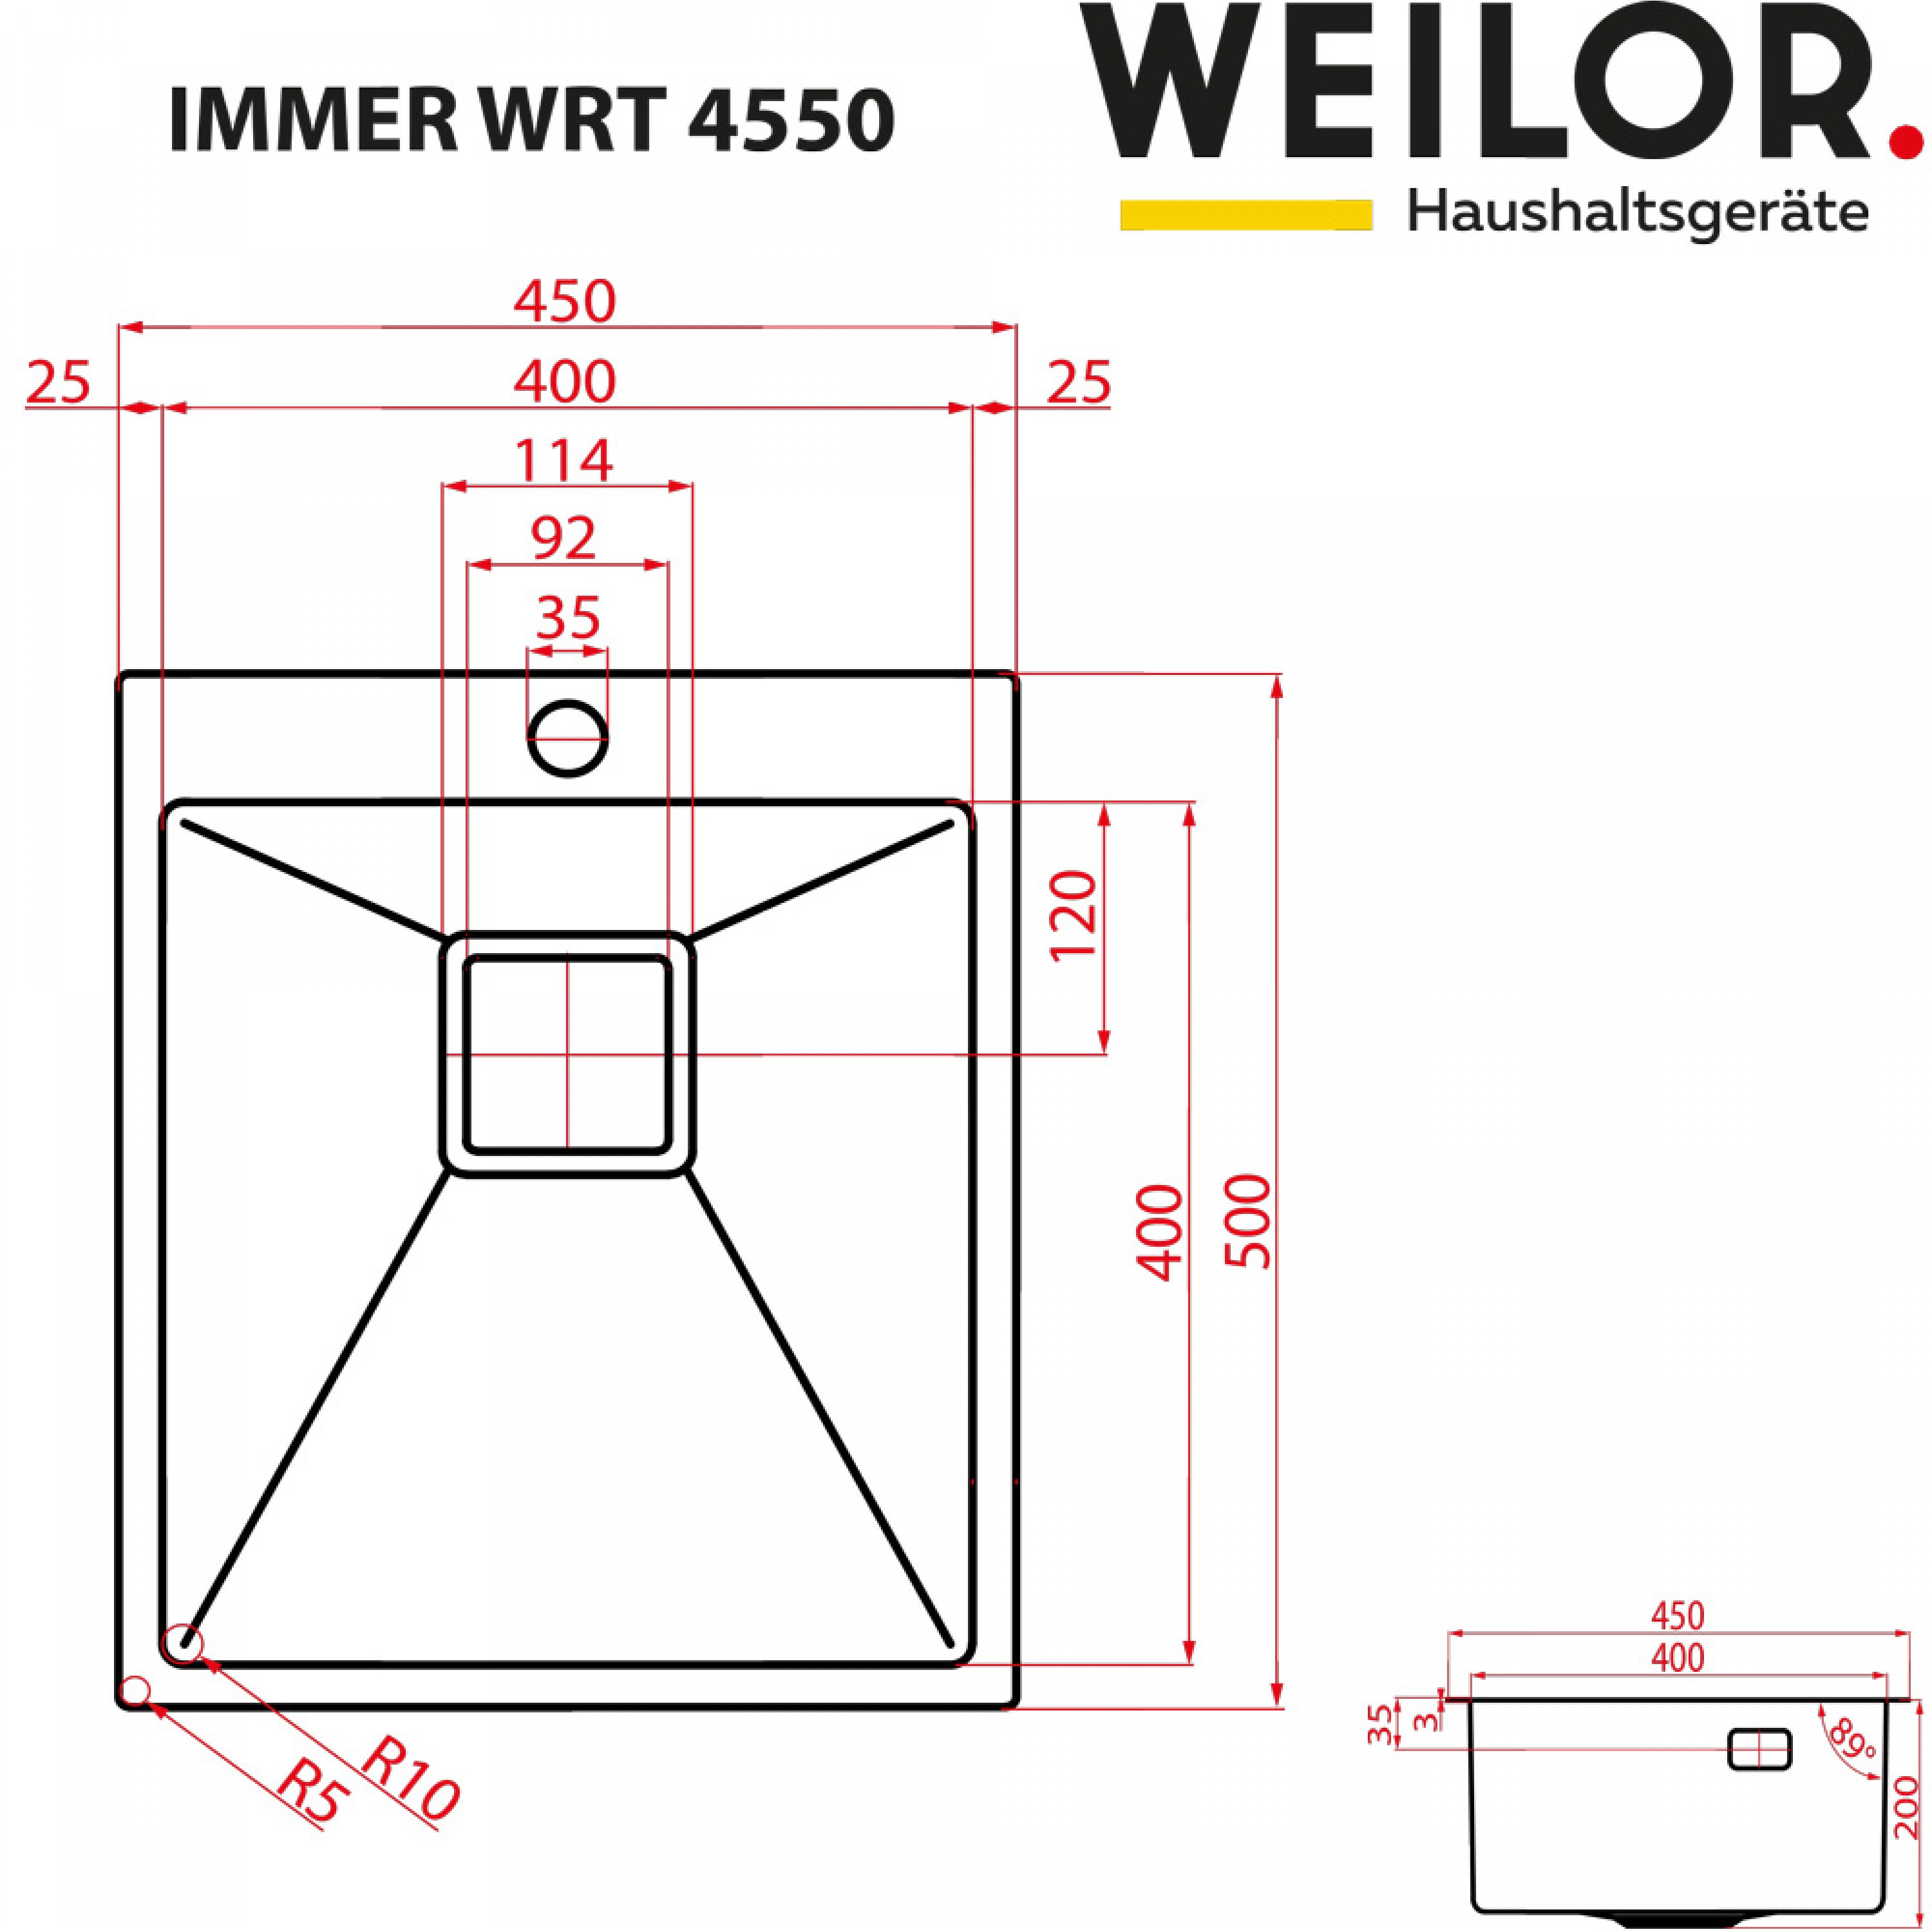 Weilor IMMER WRT 4550 Габаритные размеры